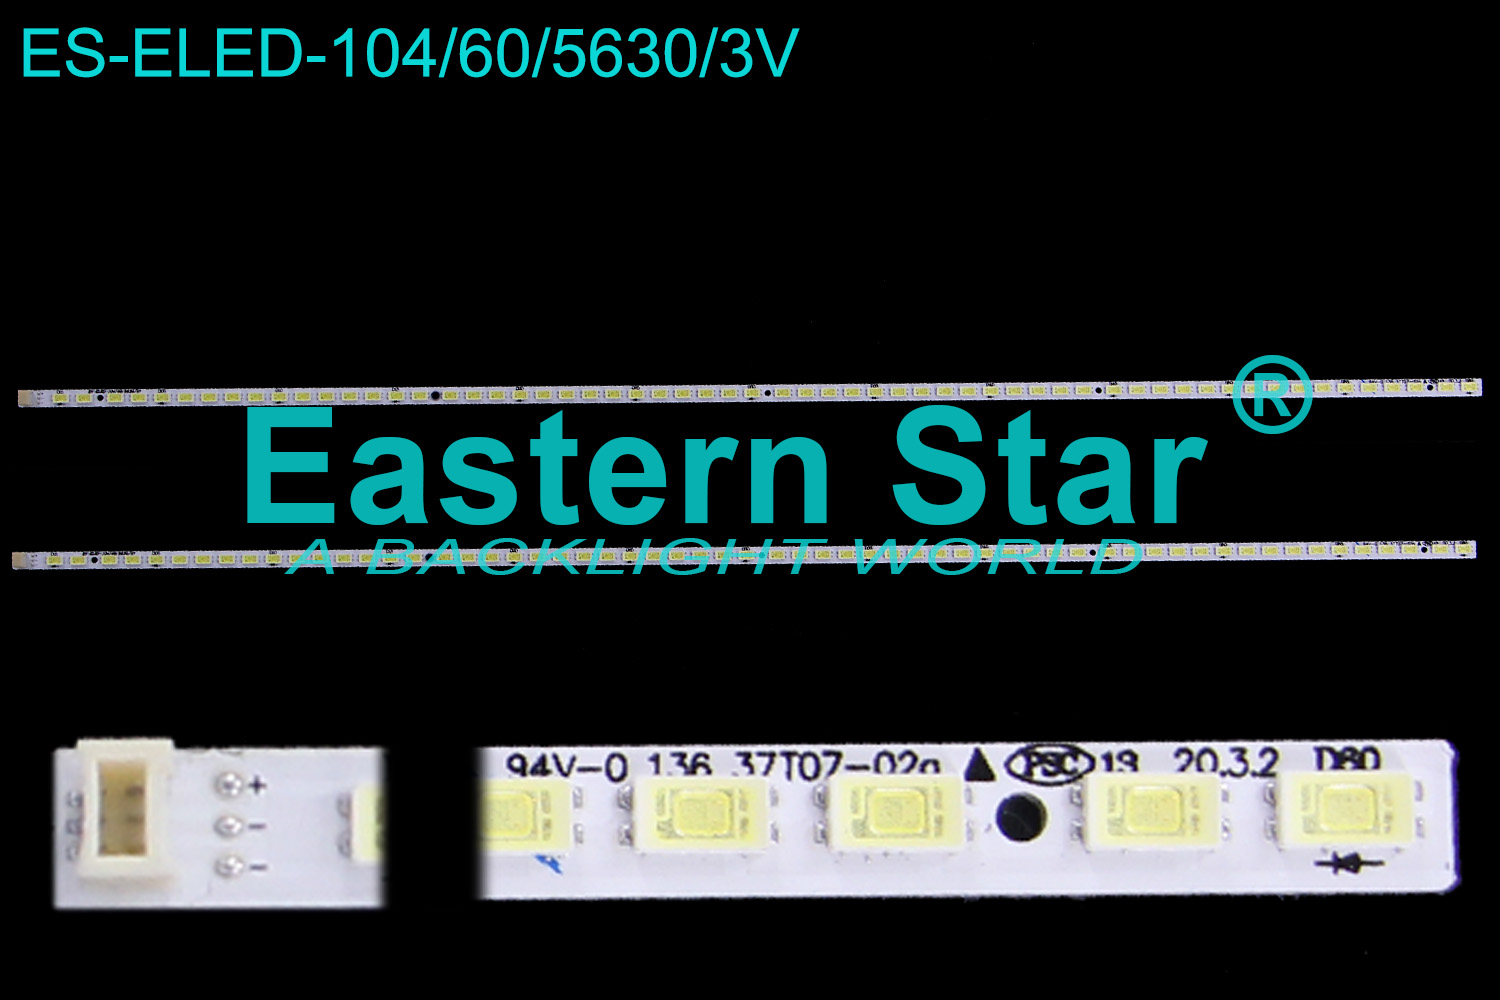 ES-ELED-104 ELED/EDGE TV backlight use for Tcl 37'' 60LEDs 37T07-02a LED STRIPS(2)